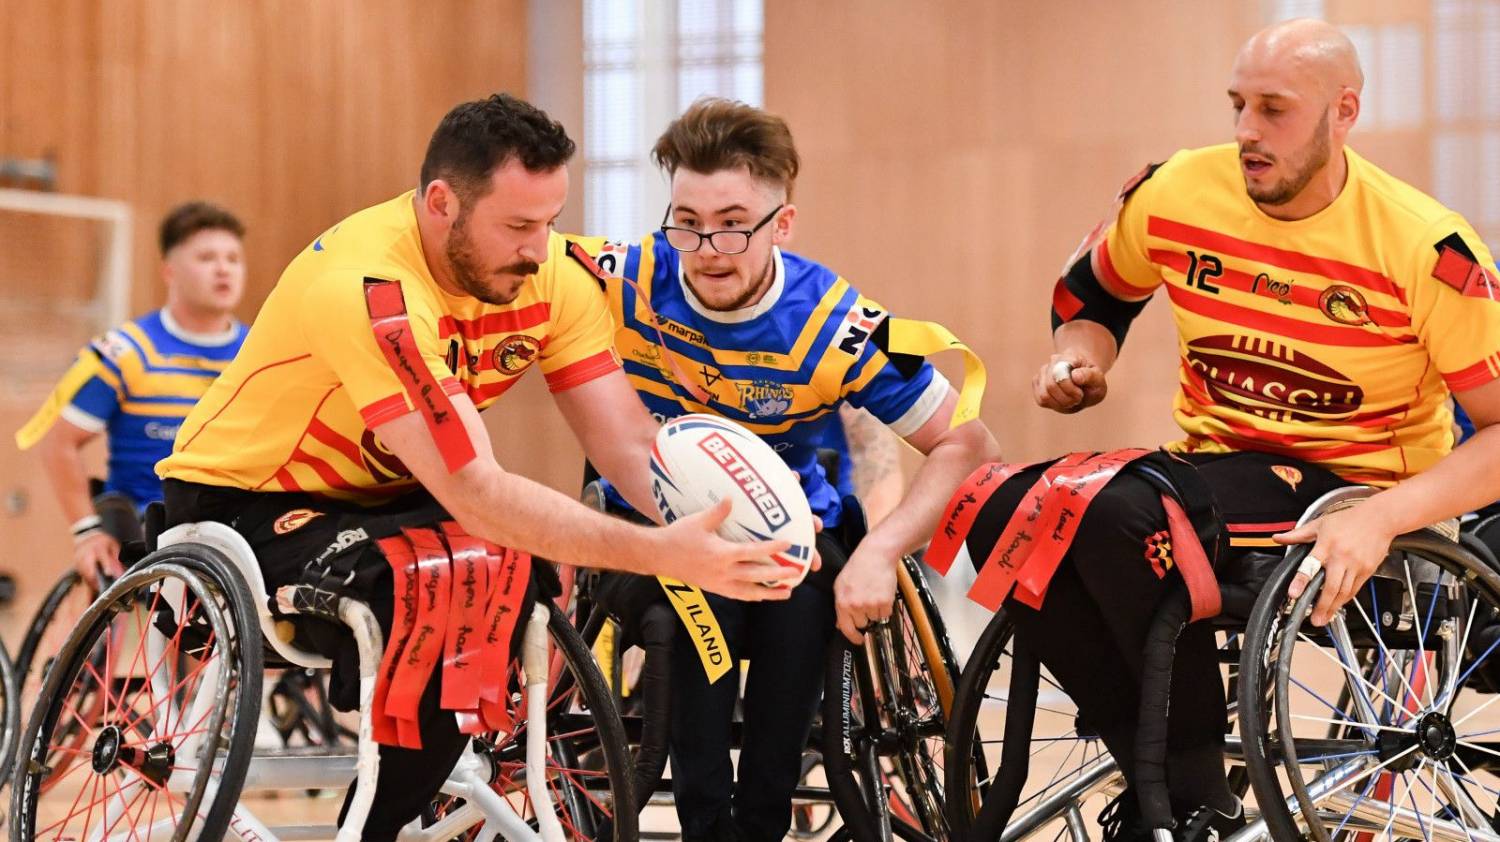 BBC to stream Wheelchair Challenge Cup Final